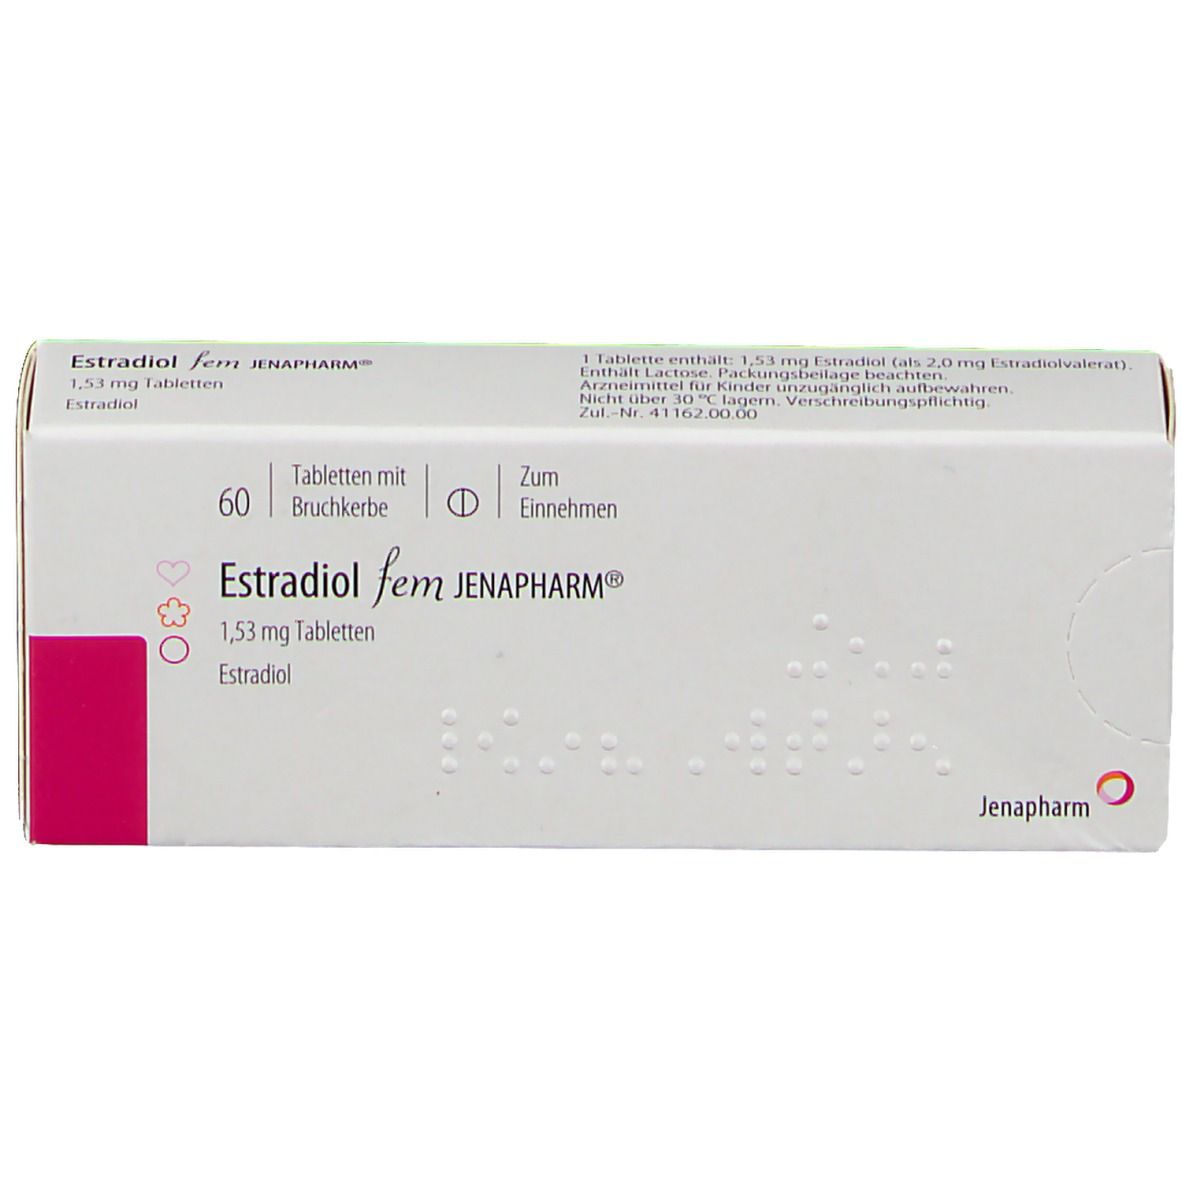 Estradiol fem JENAPHARM®